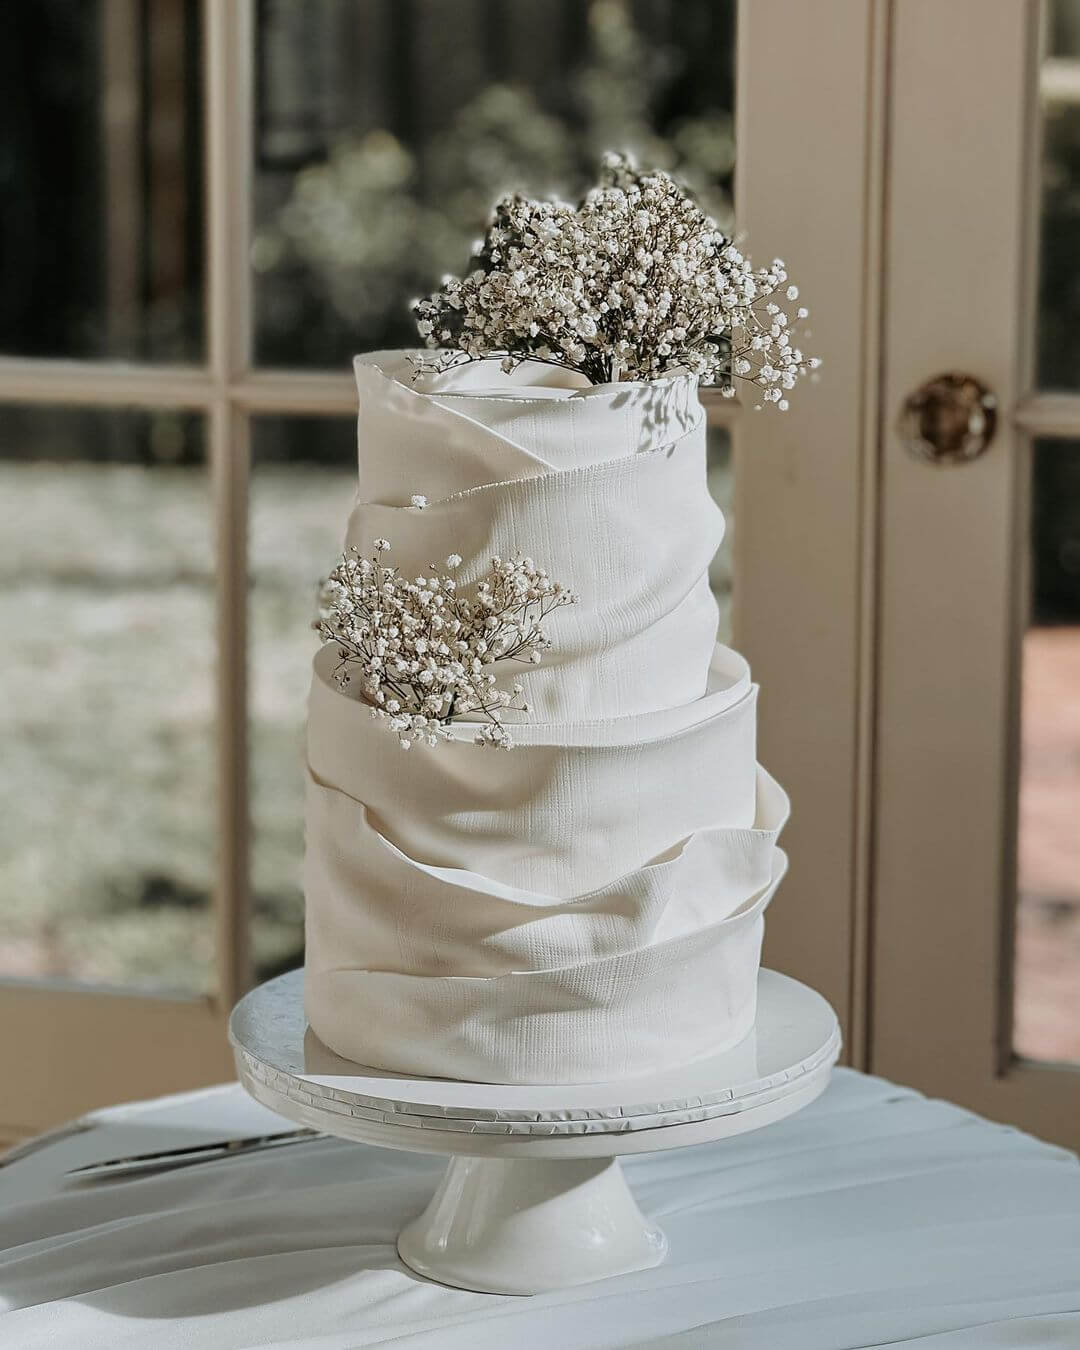 Amazing all around wedding cake experience - Patty's Cakes and Desserts